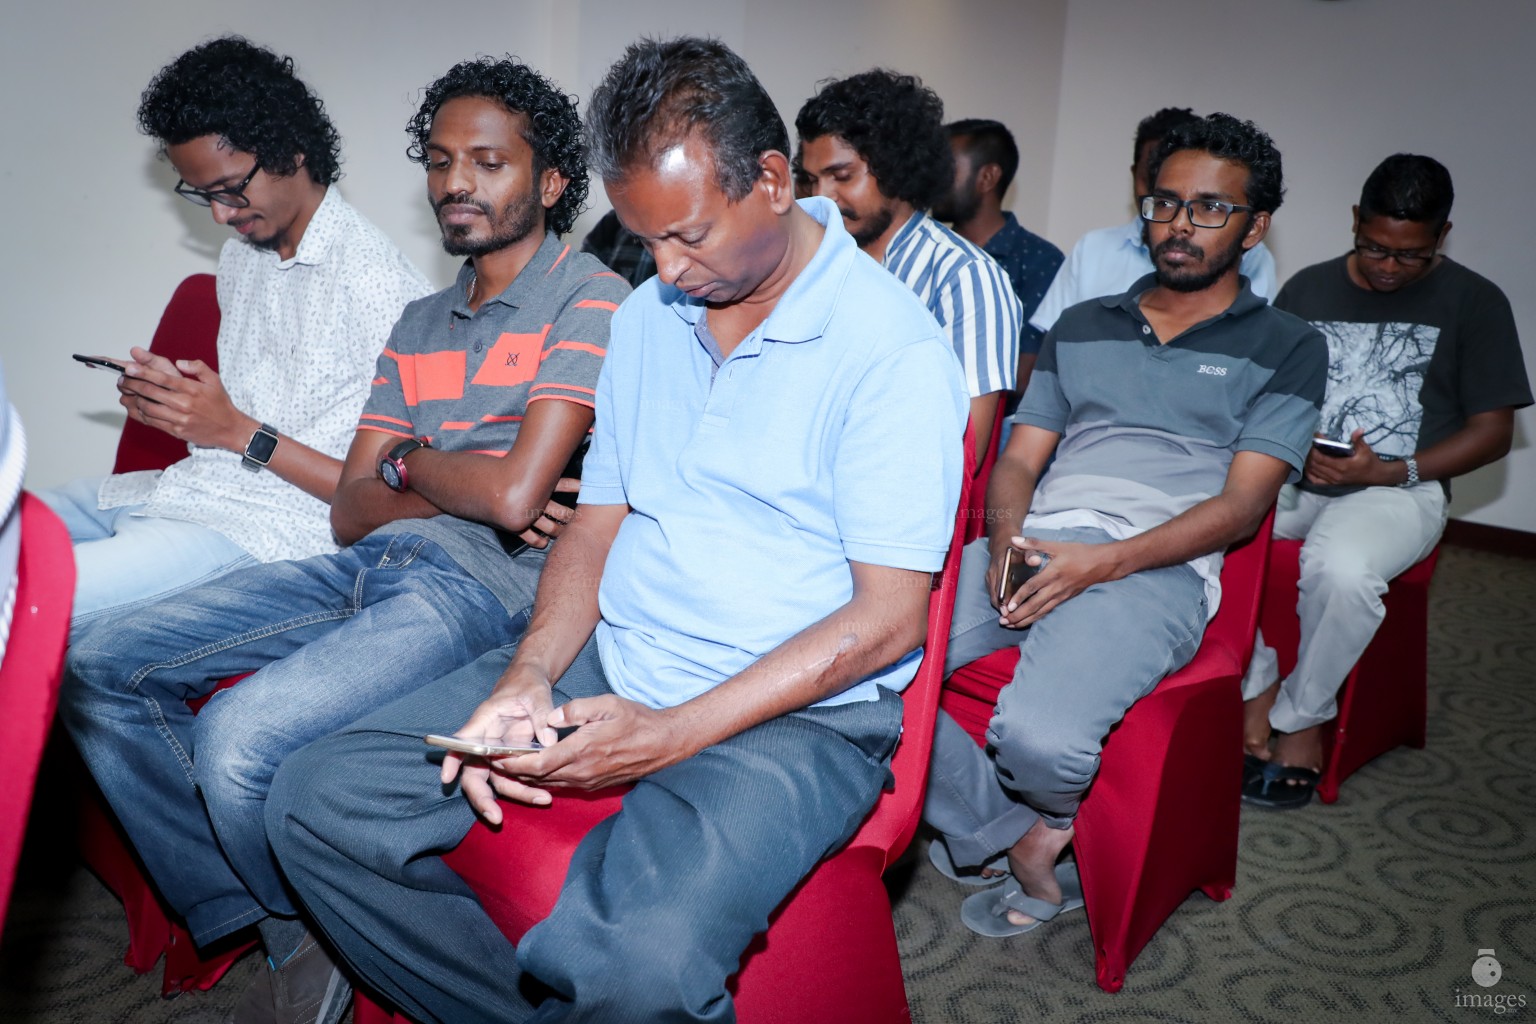 Club Maldives 2018 / Round of 16 Draw